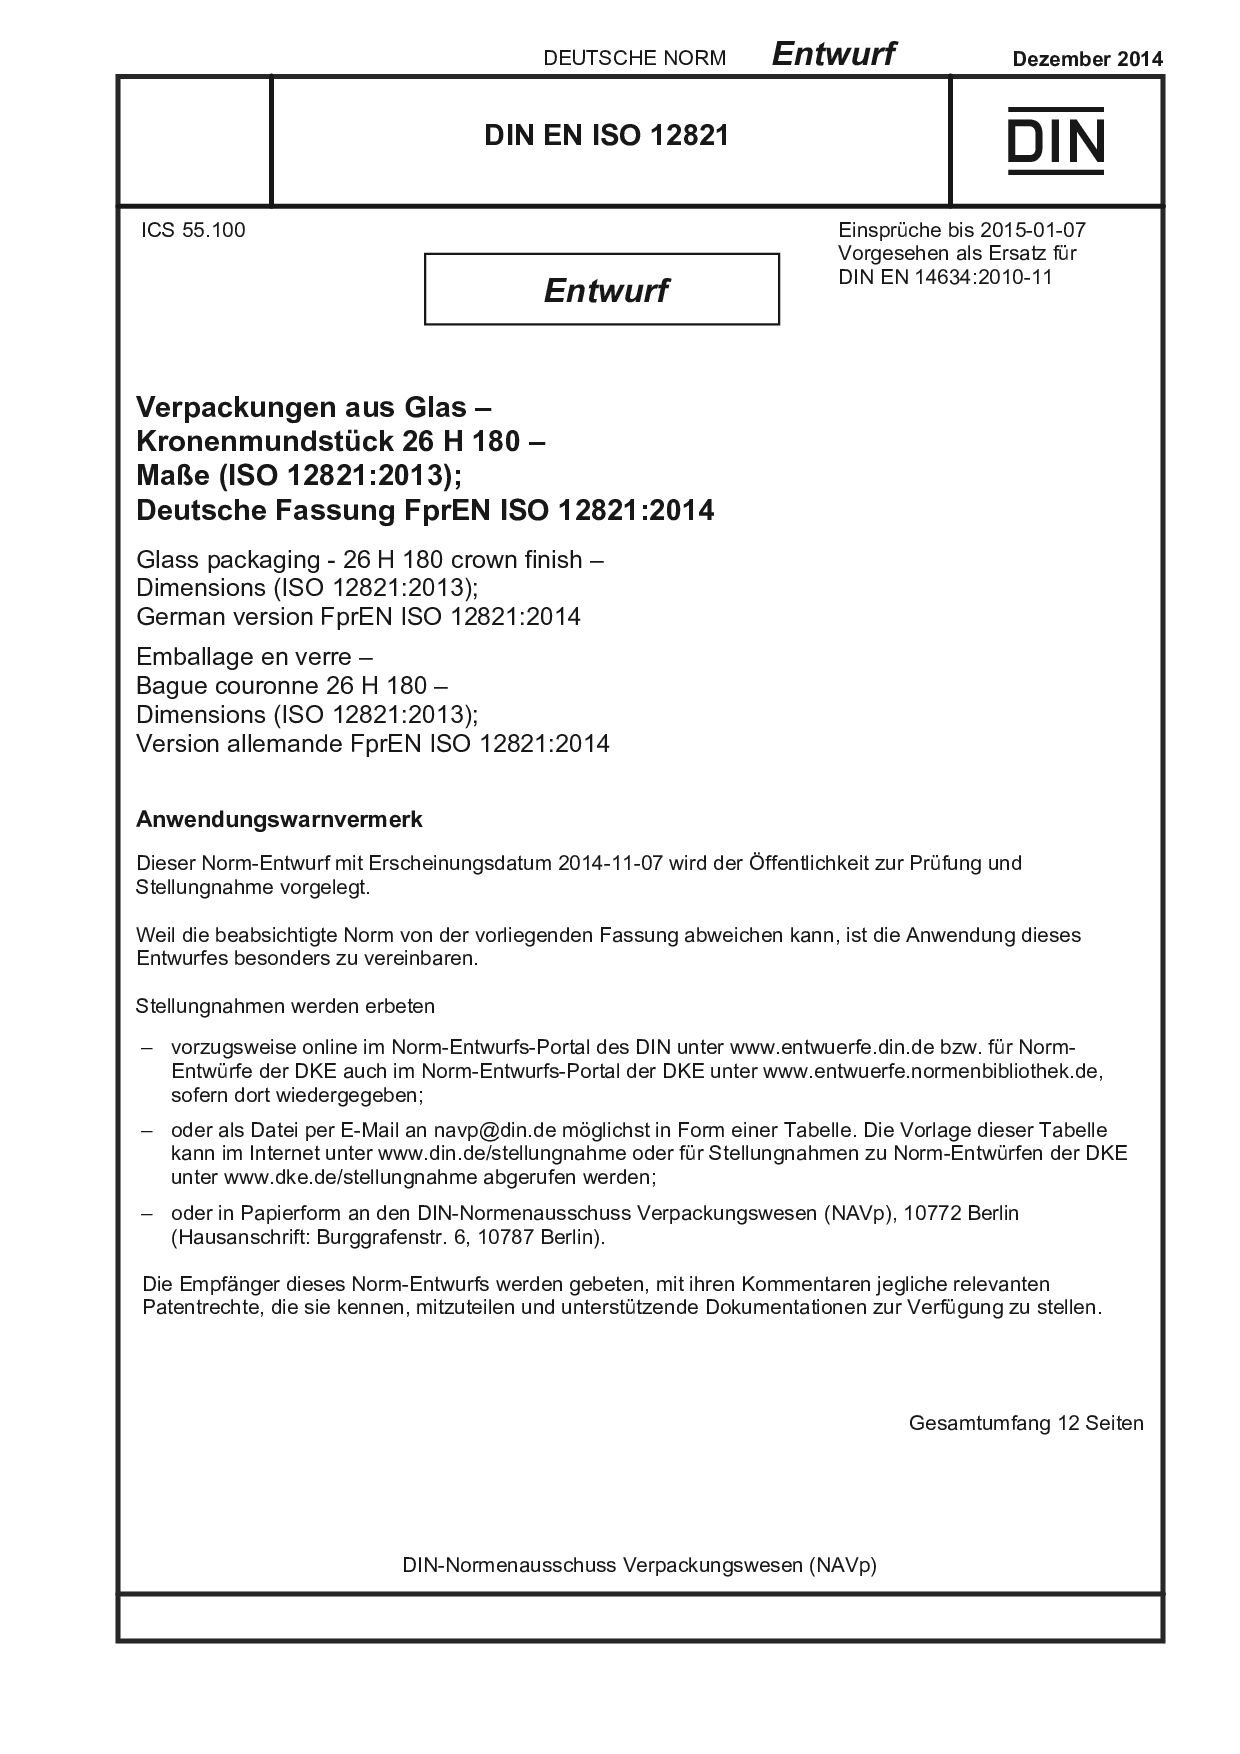 DIN EN ISO 12821 E:2014-12